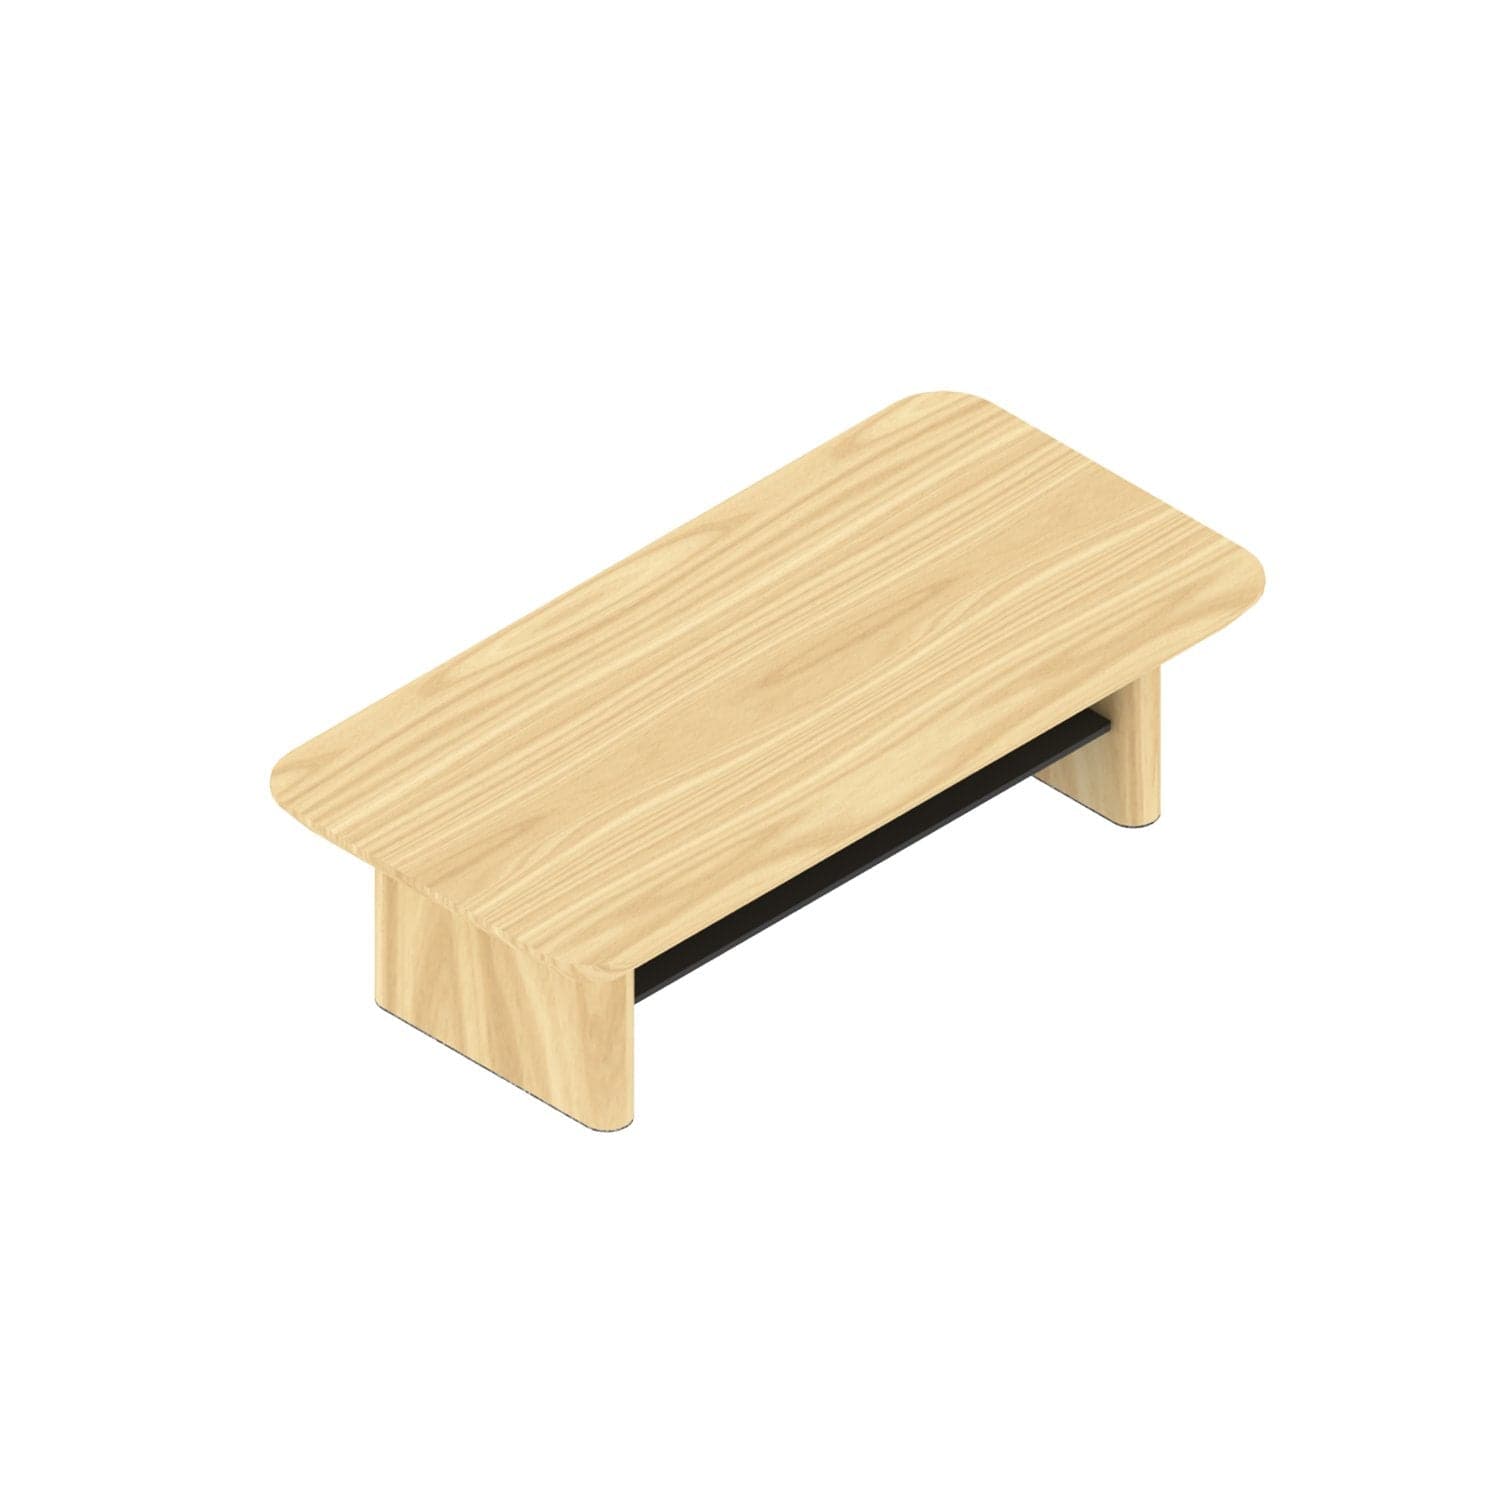 Modular Desk Shelves - Natural Wood Series